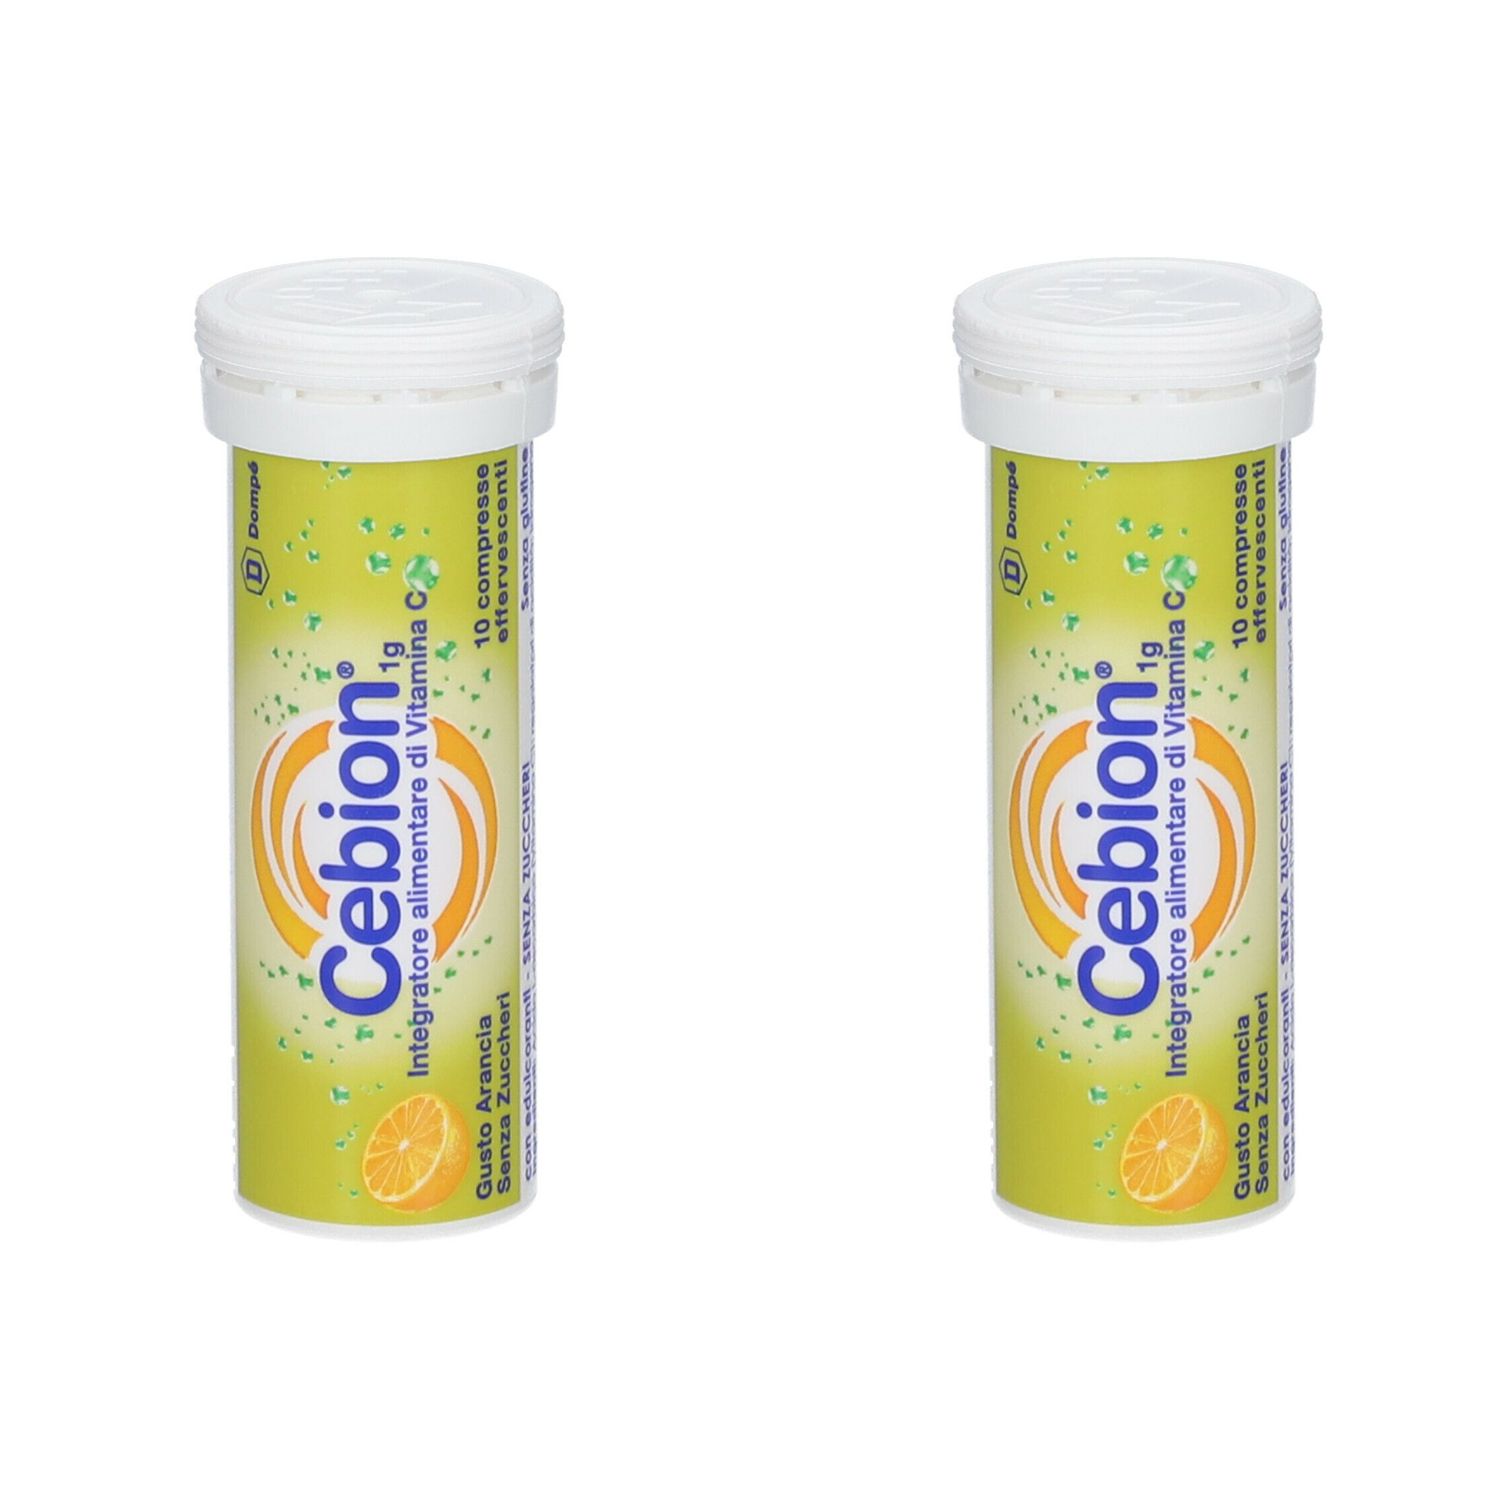 Bracco Cebion® 1 g Arancia s/zucchero